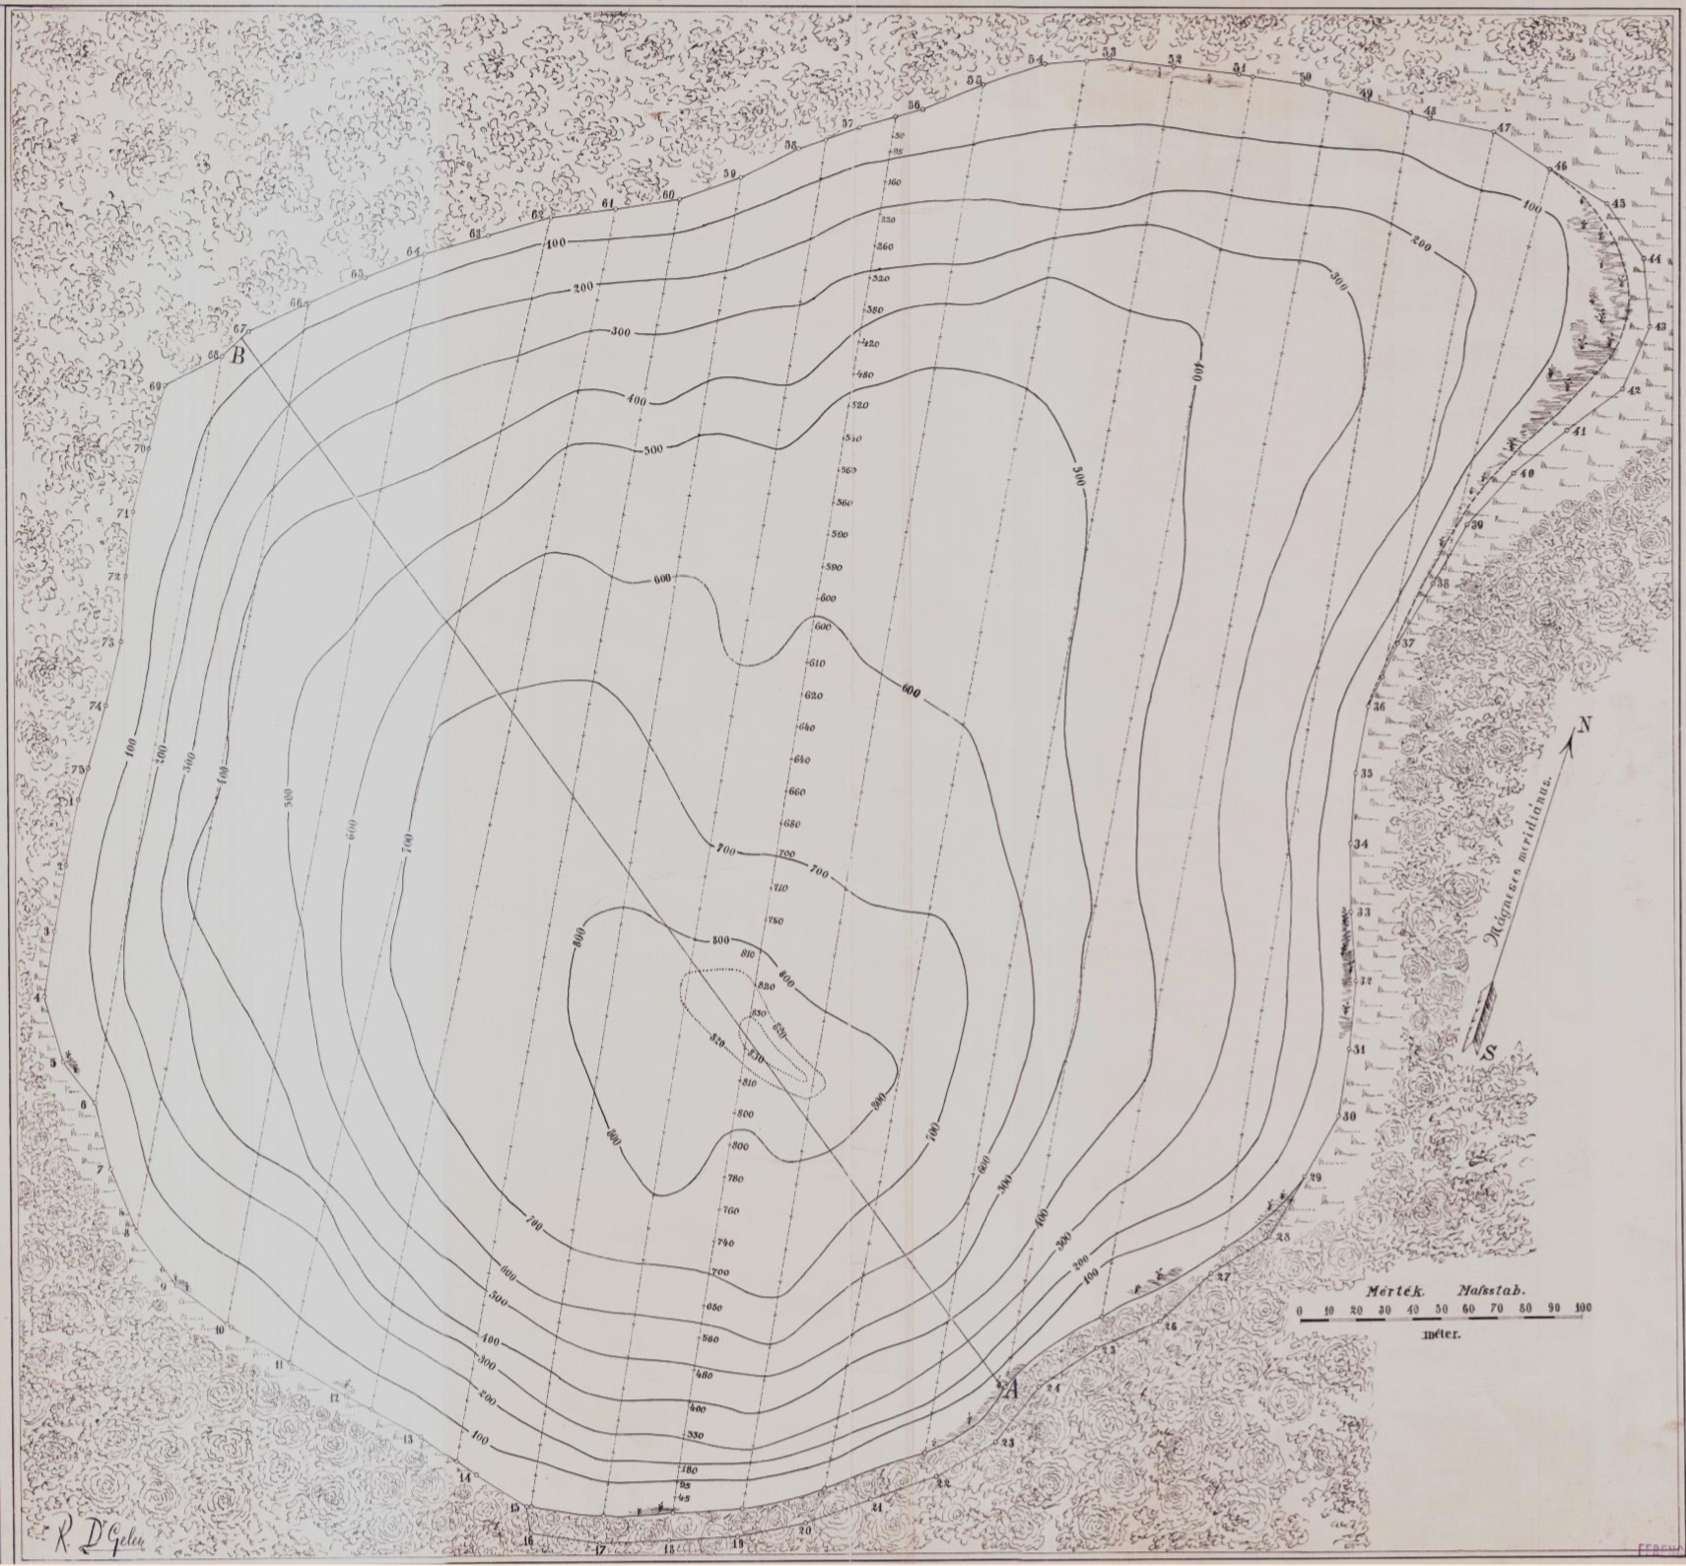 József Gelei's bathymetric map